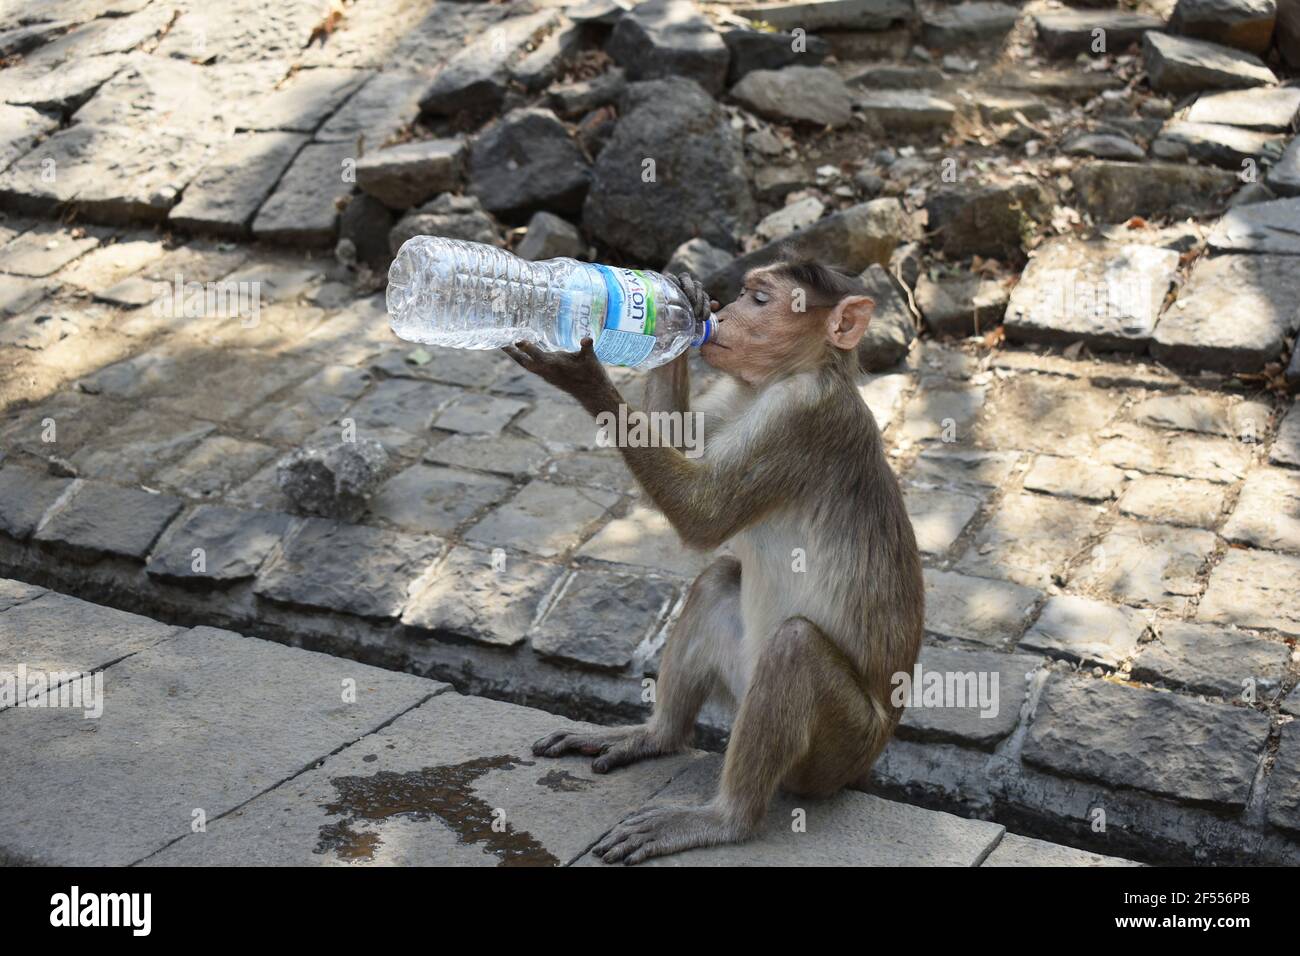 Macaco de Bonnet sediento agua potable de una botella, Cuevas Elephanta, en la Isla Elephanta o Gharapuri, Mumbai, Maharashtra, India Foto de stock